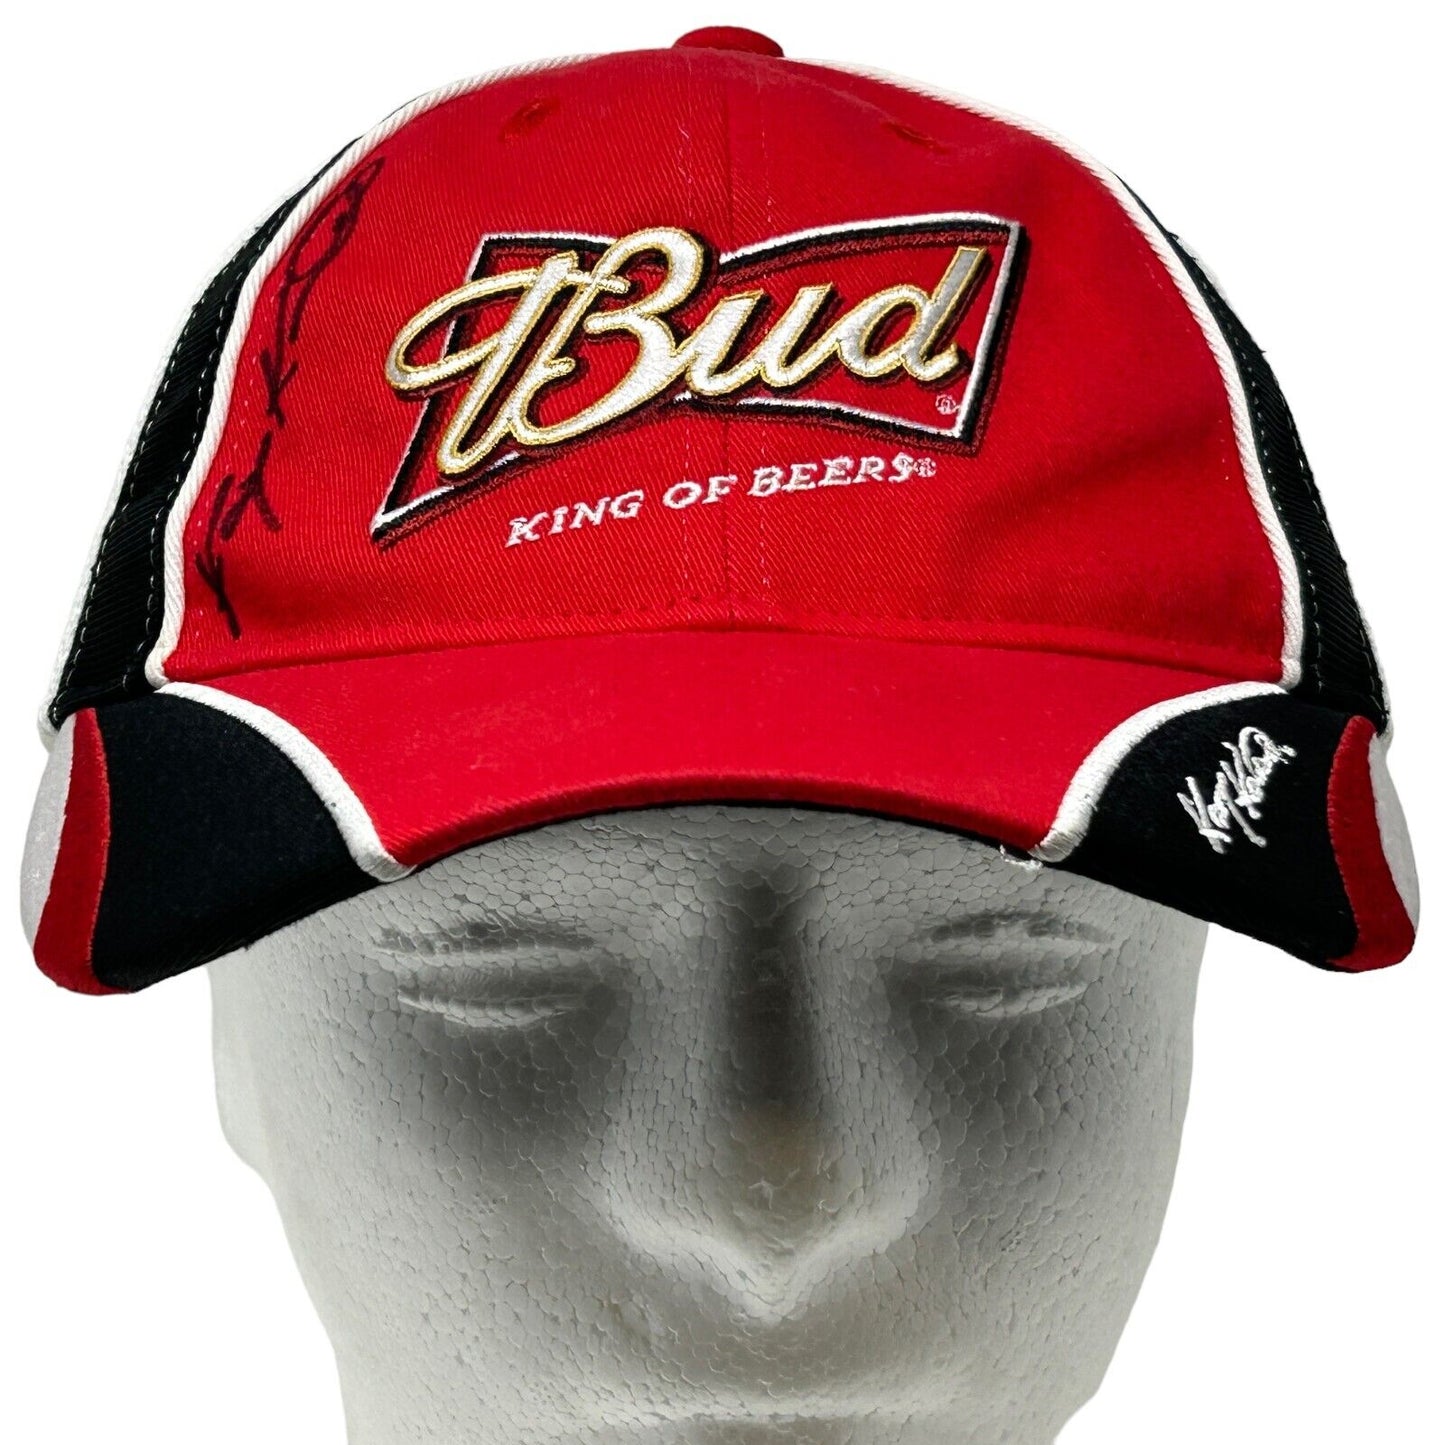 Kasey Kahne Autographed Hat Signed Budweiser 2008 Pitcap NASCAR Red Baseball Cap